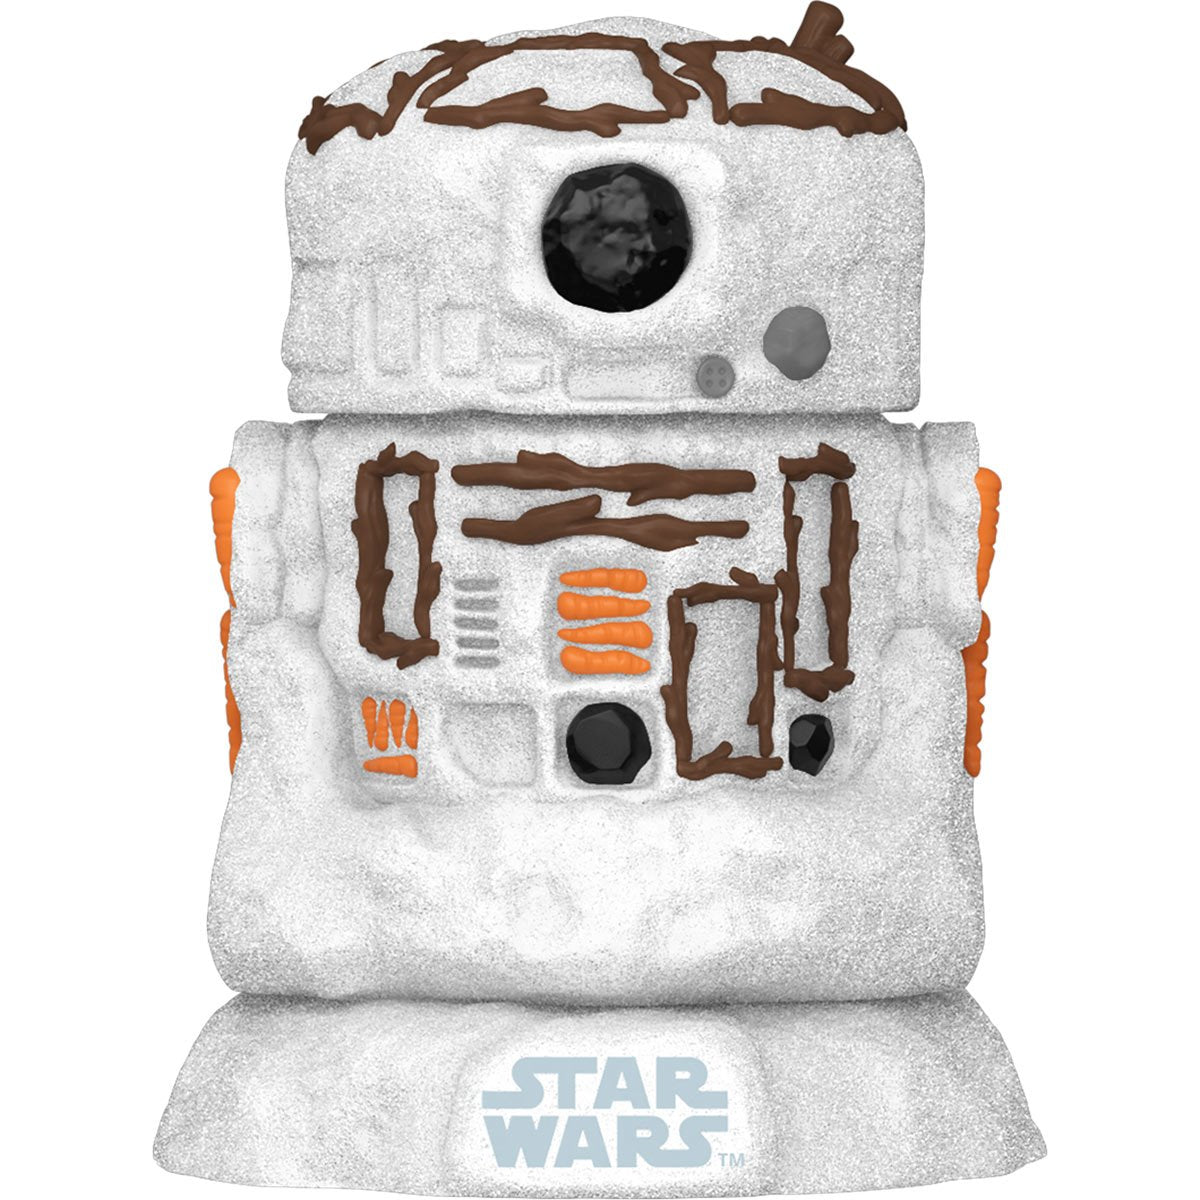 Funko Pop ! Vacances Star Wars : bonhomme de neige R2-D2